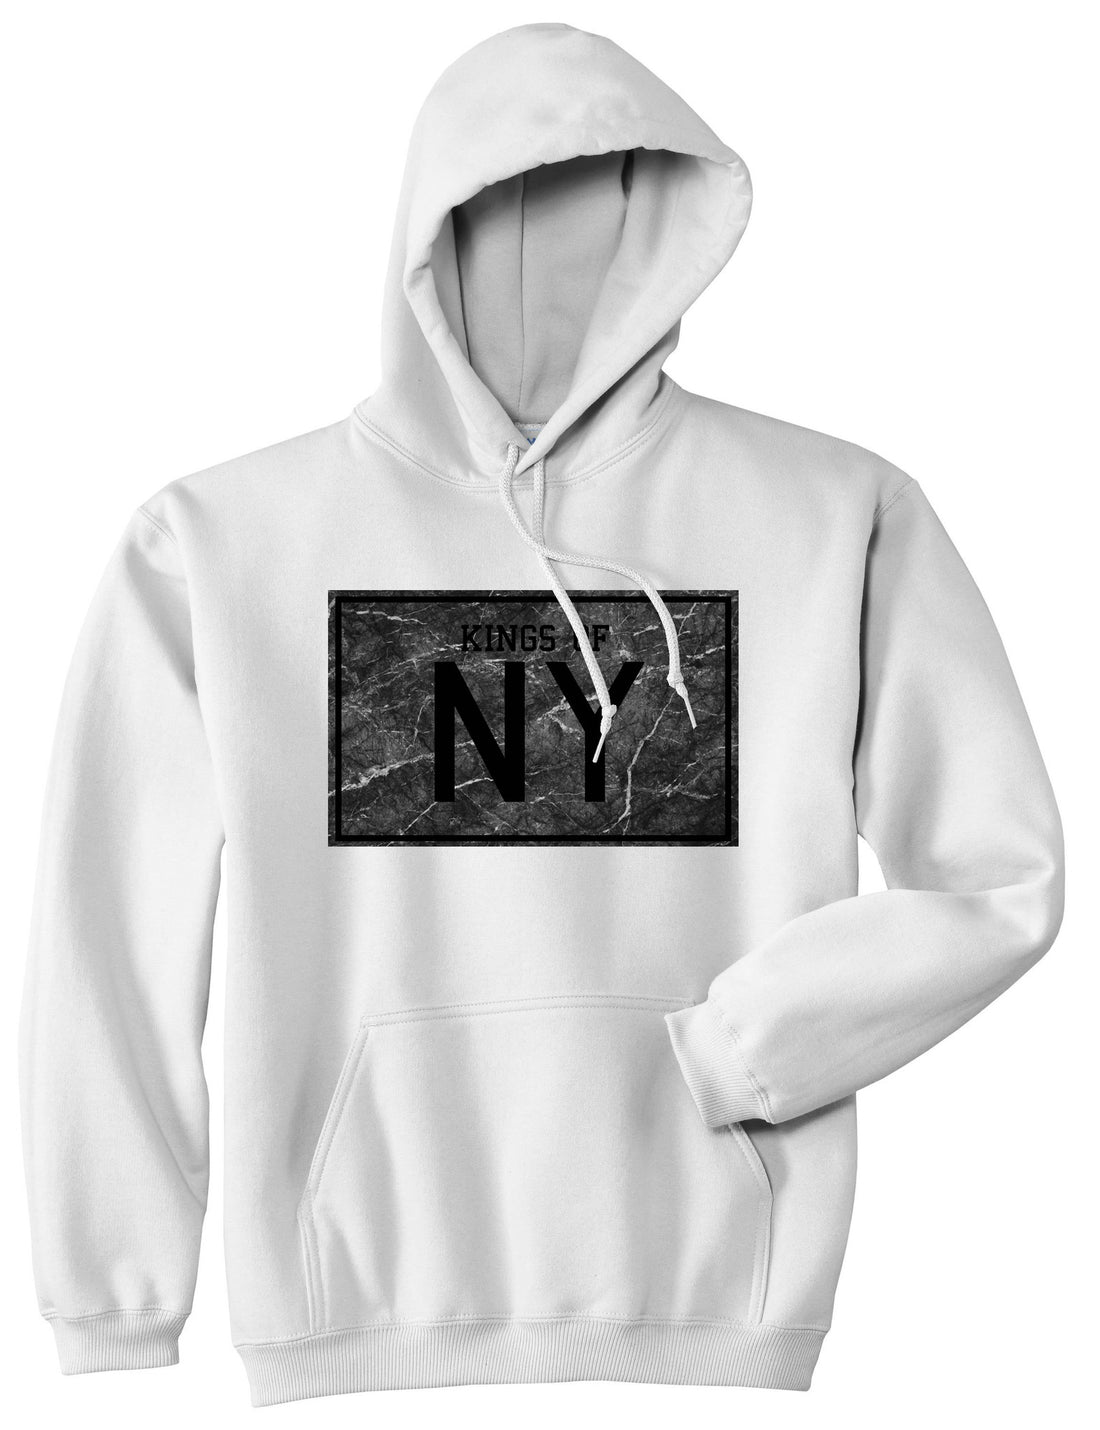 Granite NY Logo Print Boys Kids Pullover Hoodie Hoody in White by Kings Of NY